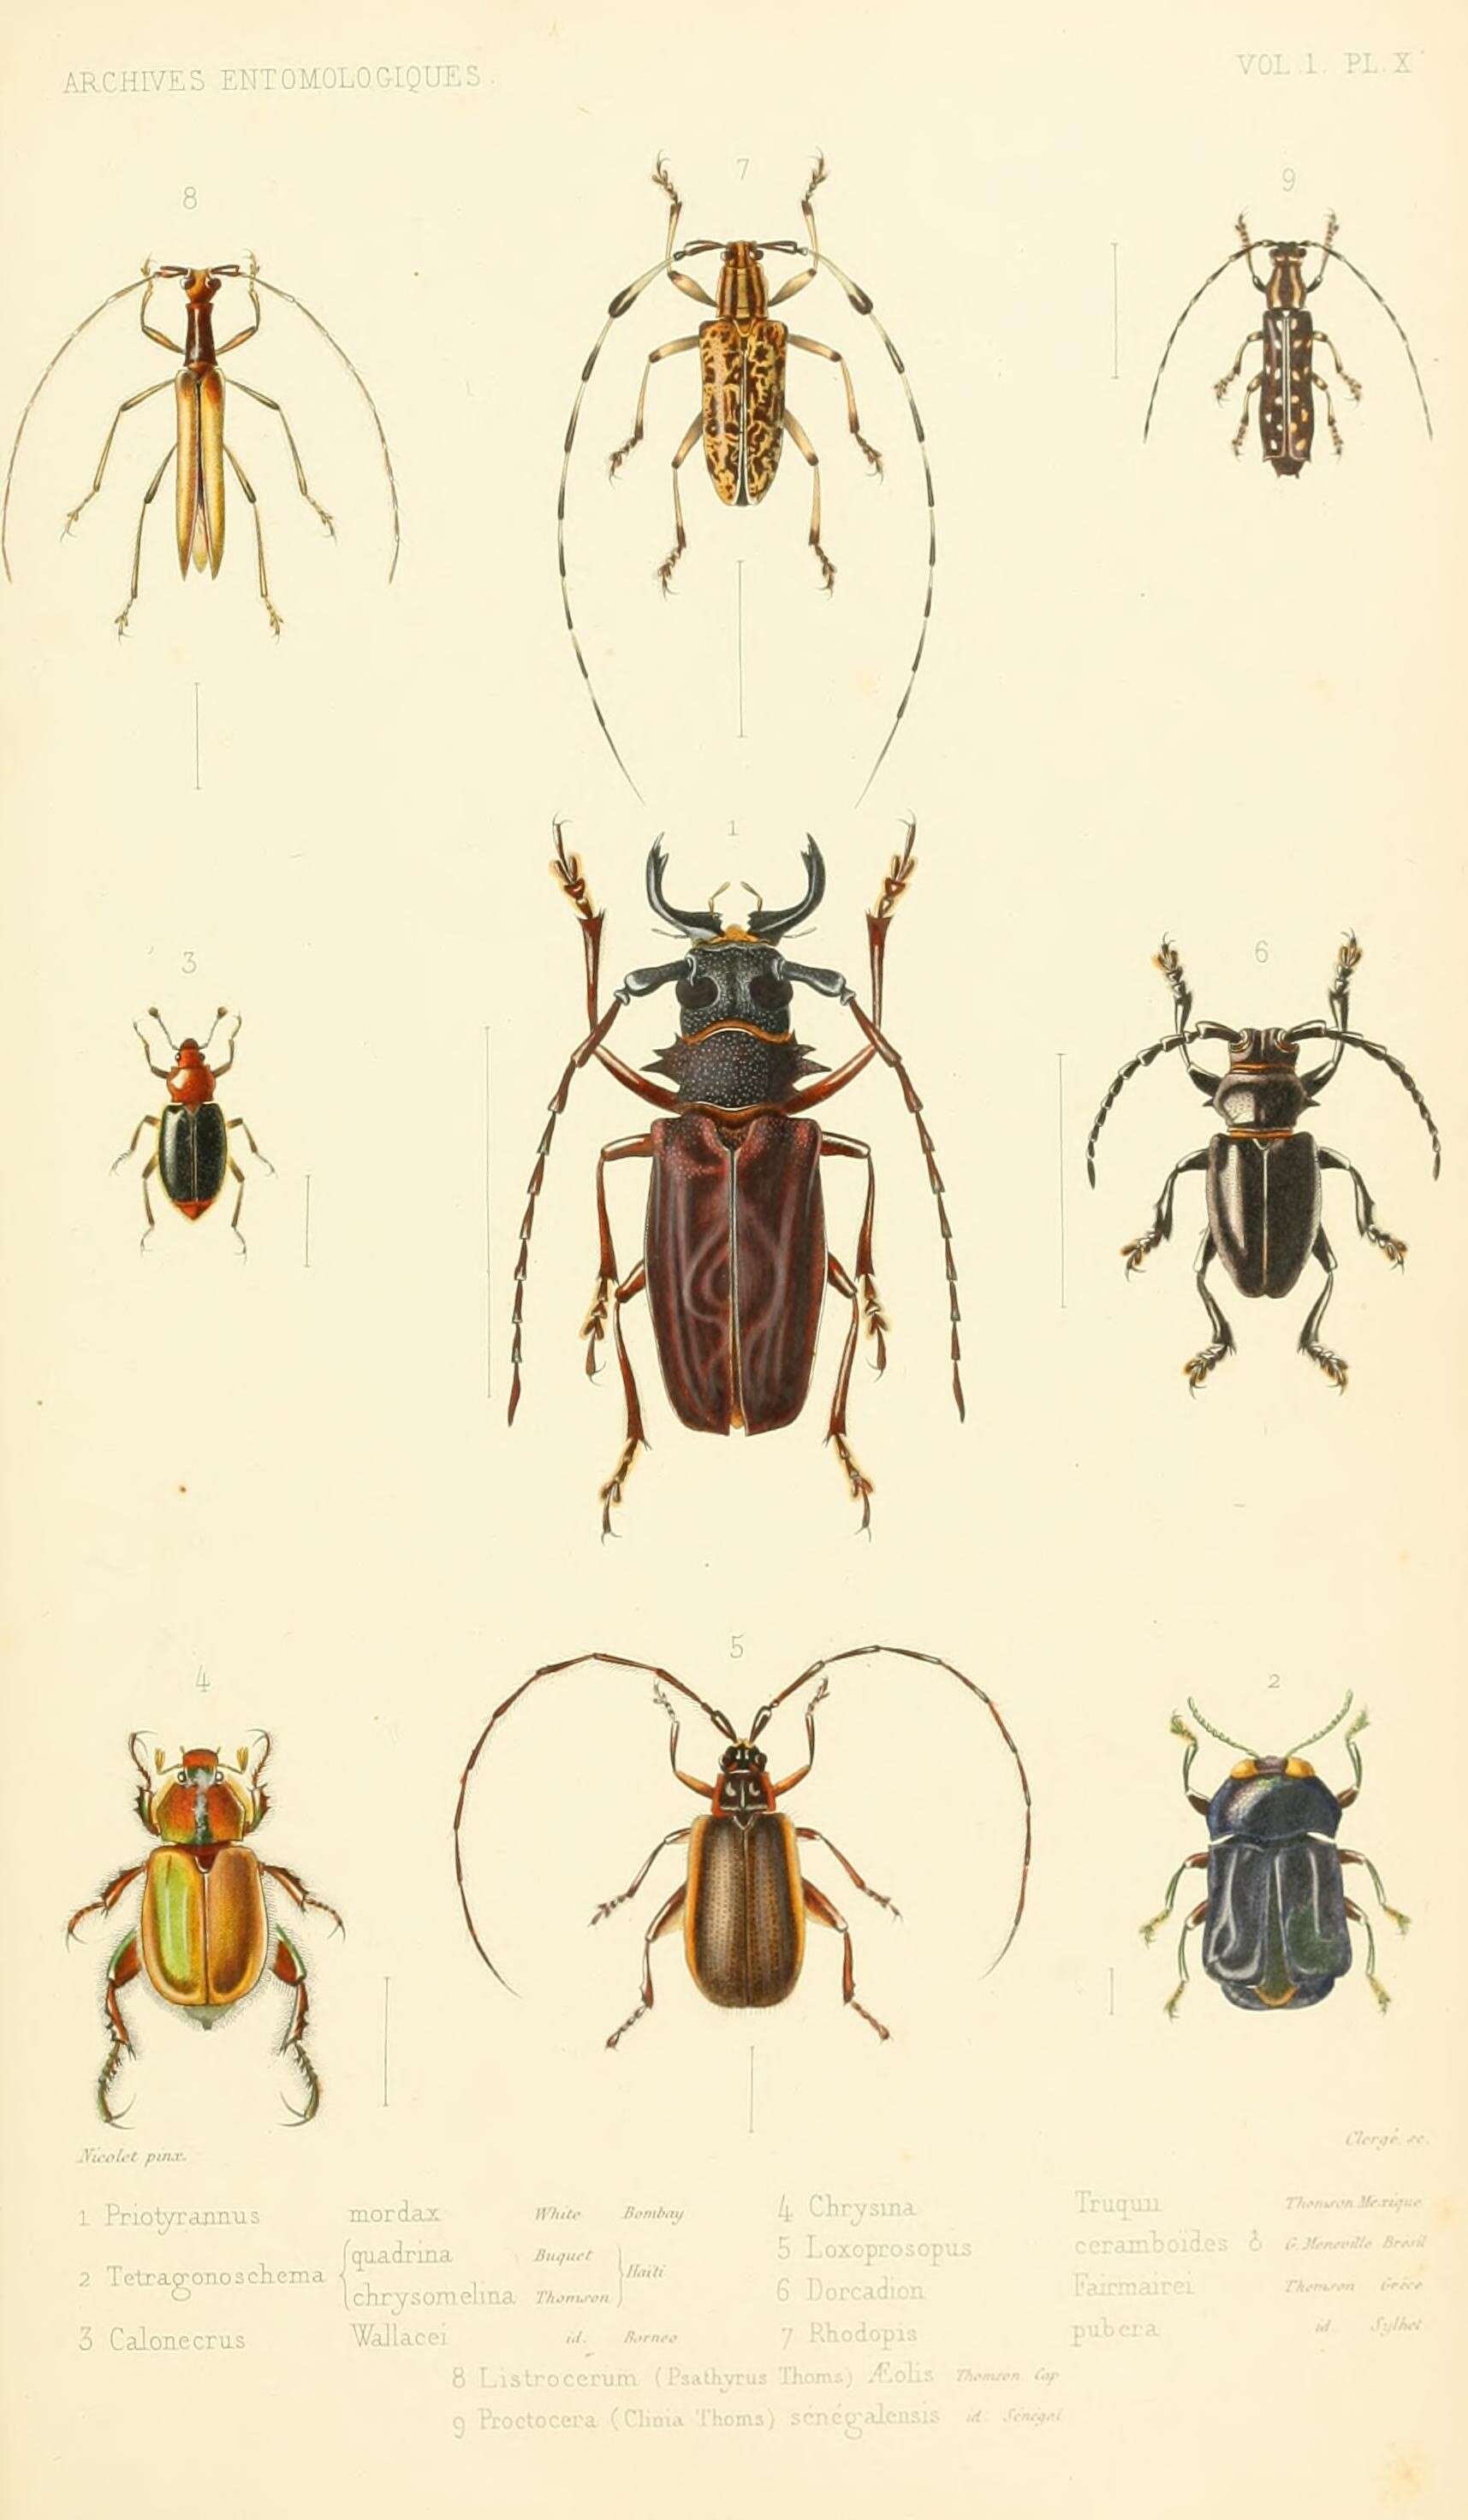 Sivun Priotyrannus mordax (White 1853) kuva